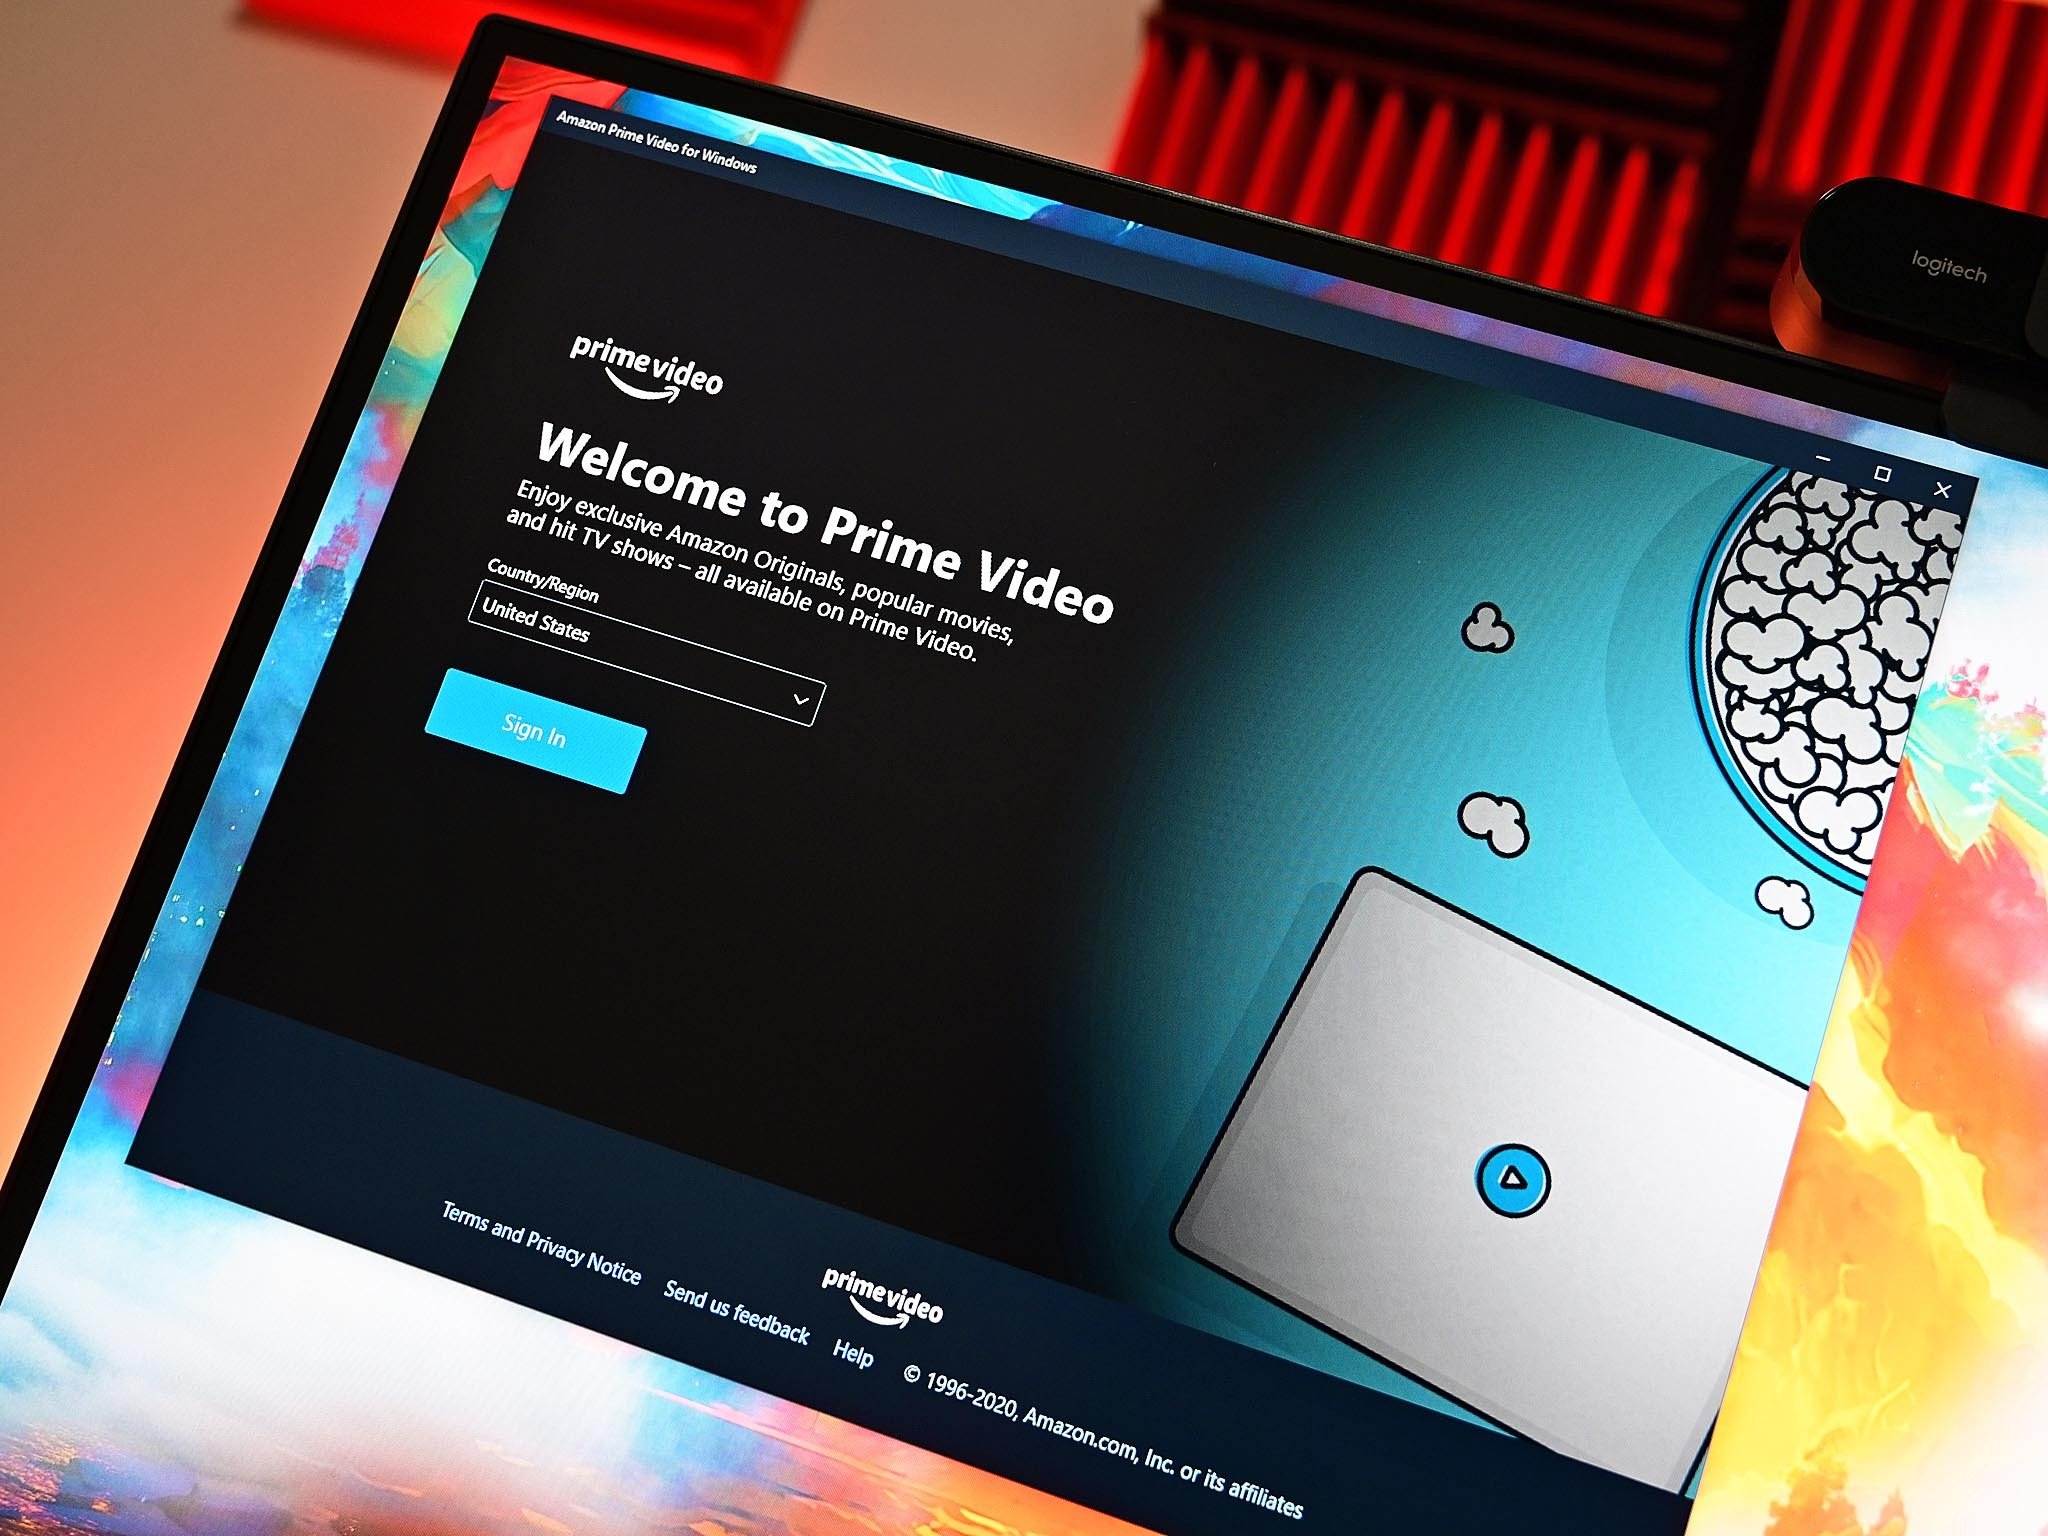 amazon-prime-video-windows10-app-2020.jpg